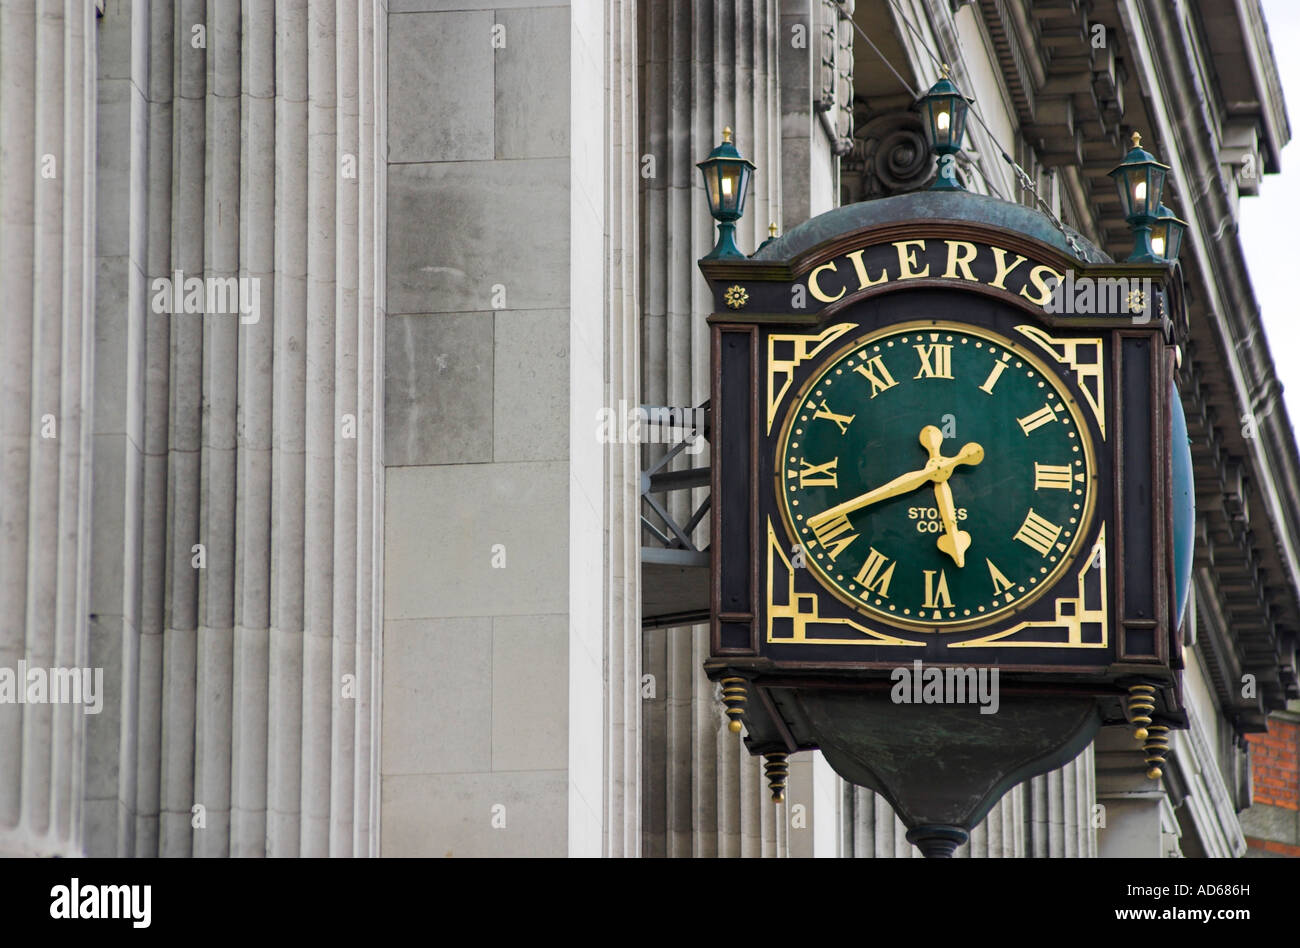 Clery s Clock en la parte delantera de Clery y Co Ltd department store O Connell Street Dublin County Dublin Irlanda Foto de stock